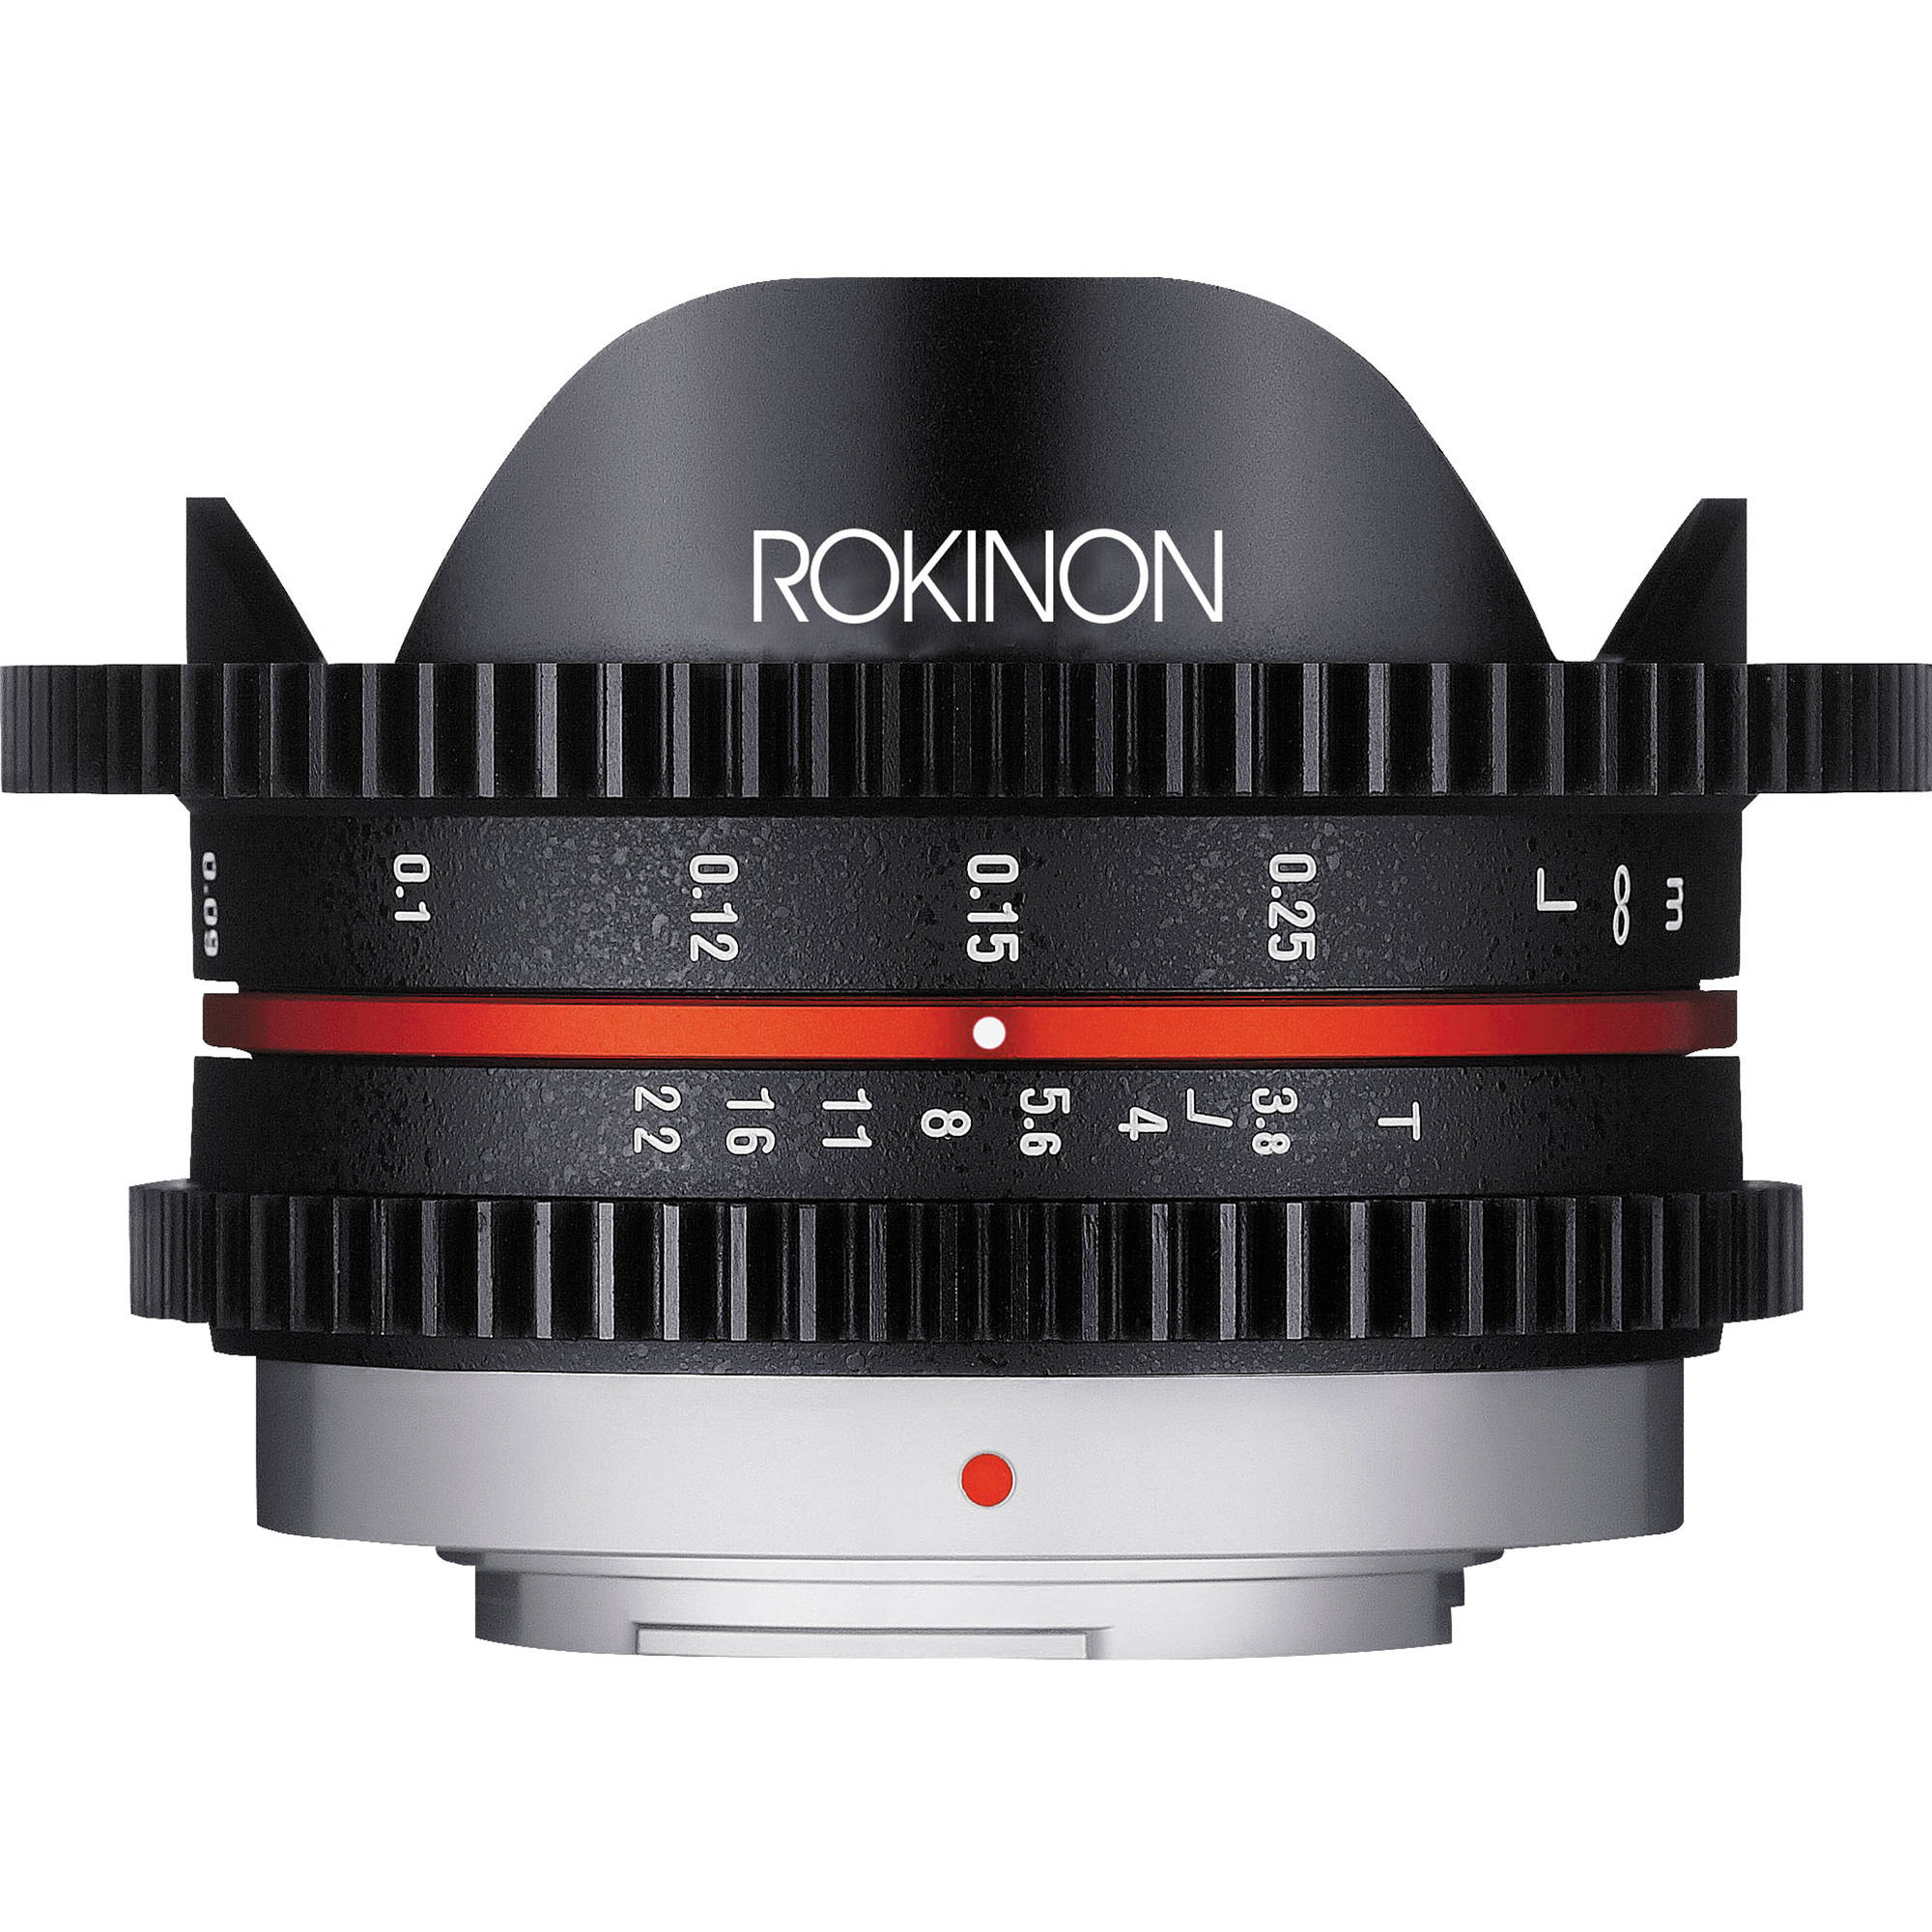 Rokinon 7.5mm T3.8 Cine UMC Lente ojo de pez para montura Micro Cuatro Tercios